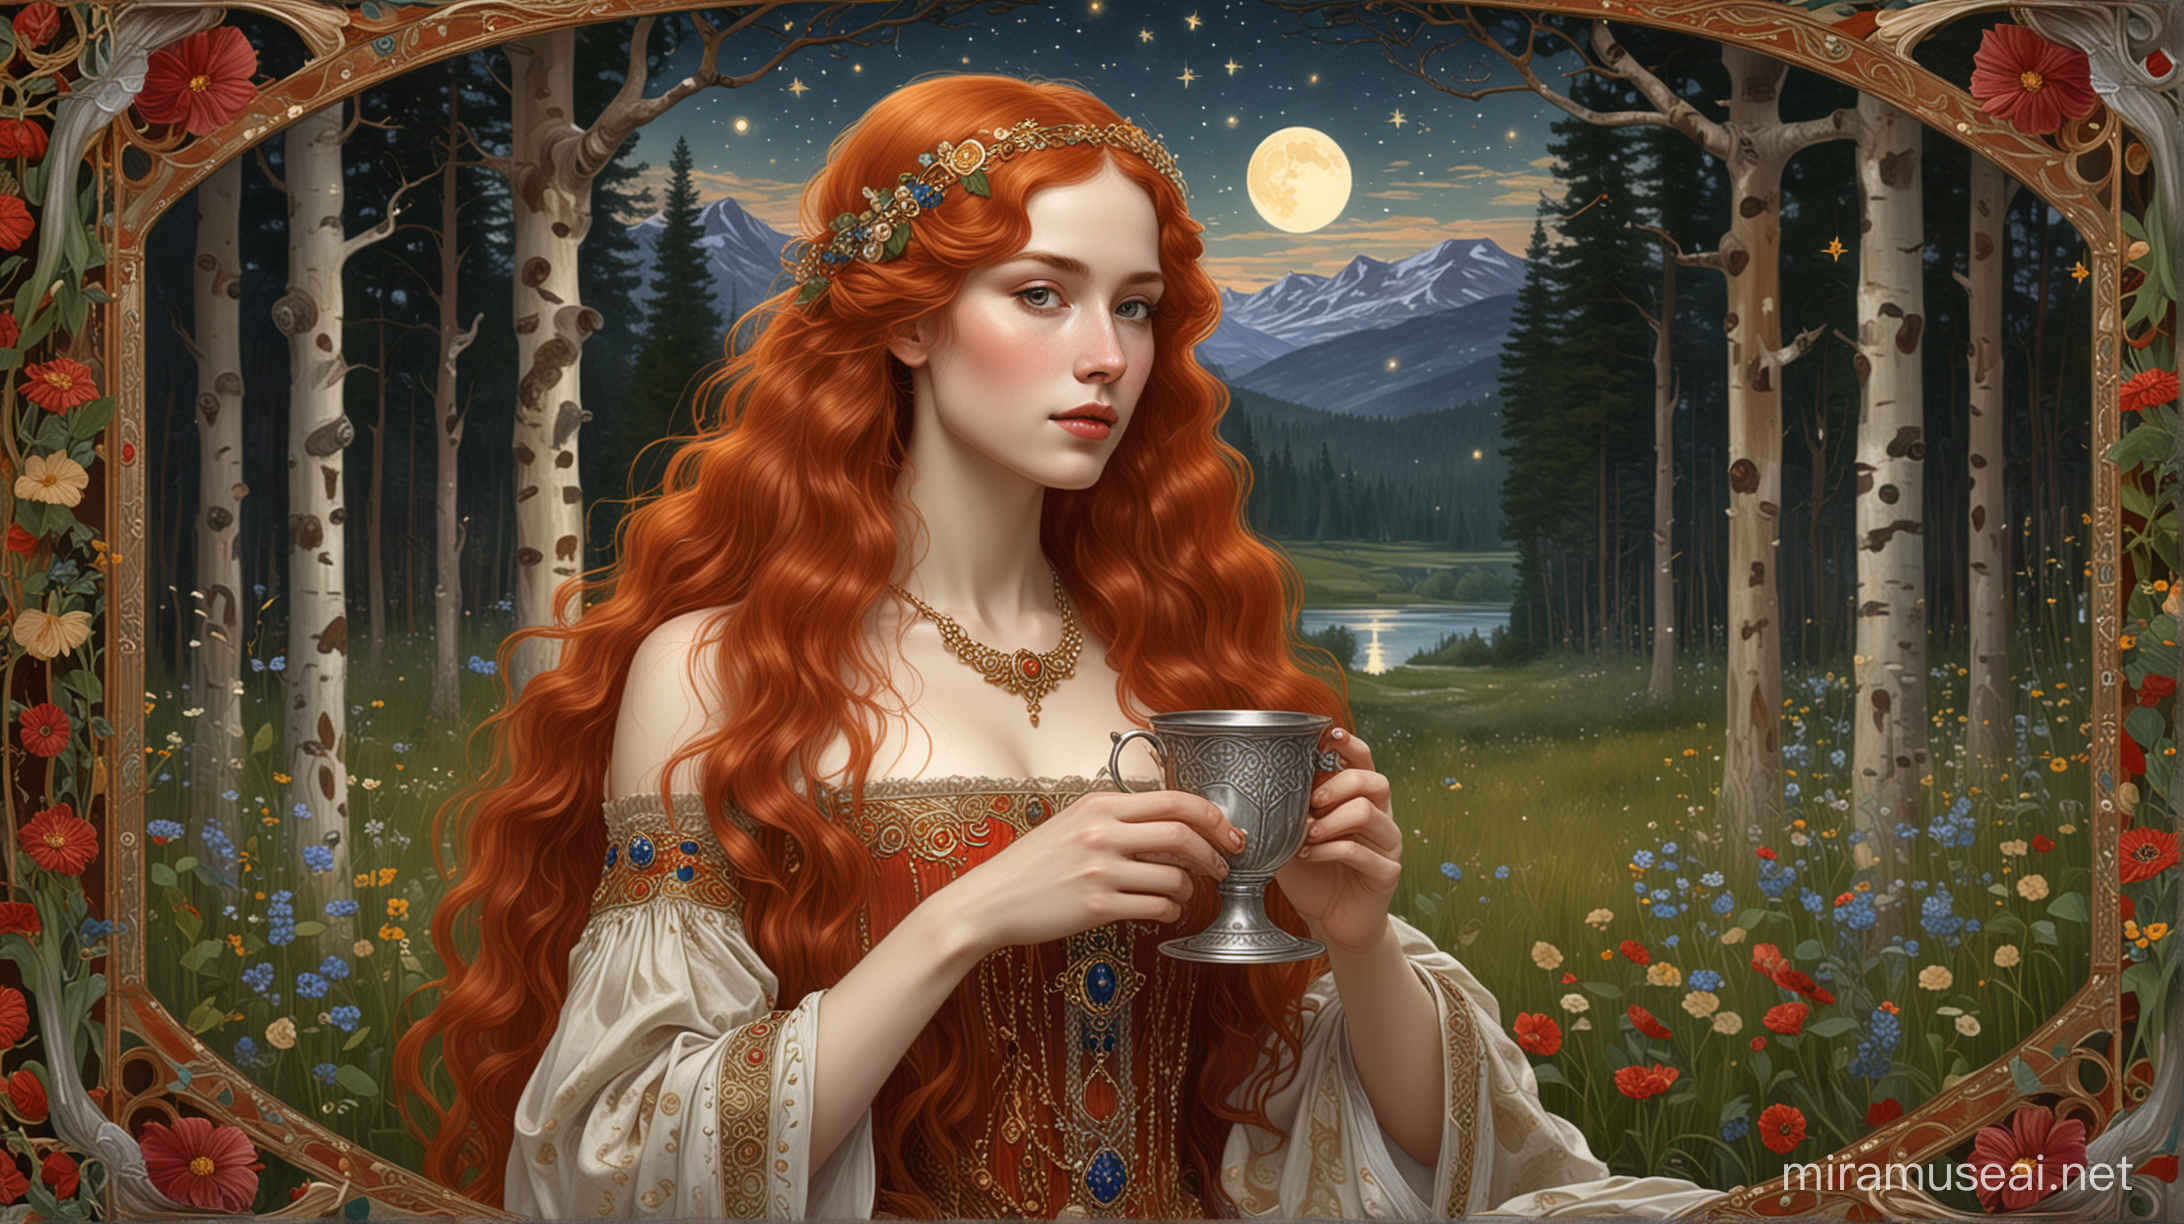 Medieval Princess with Long Red Hair Enjoying Coffee in Birch Grove Night Scene